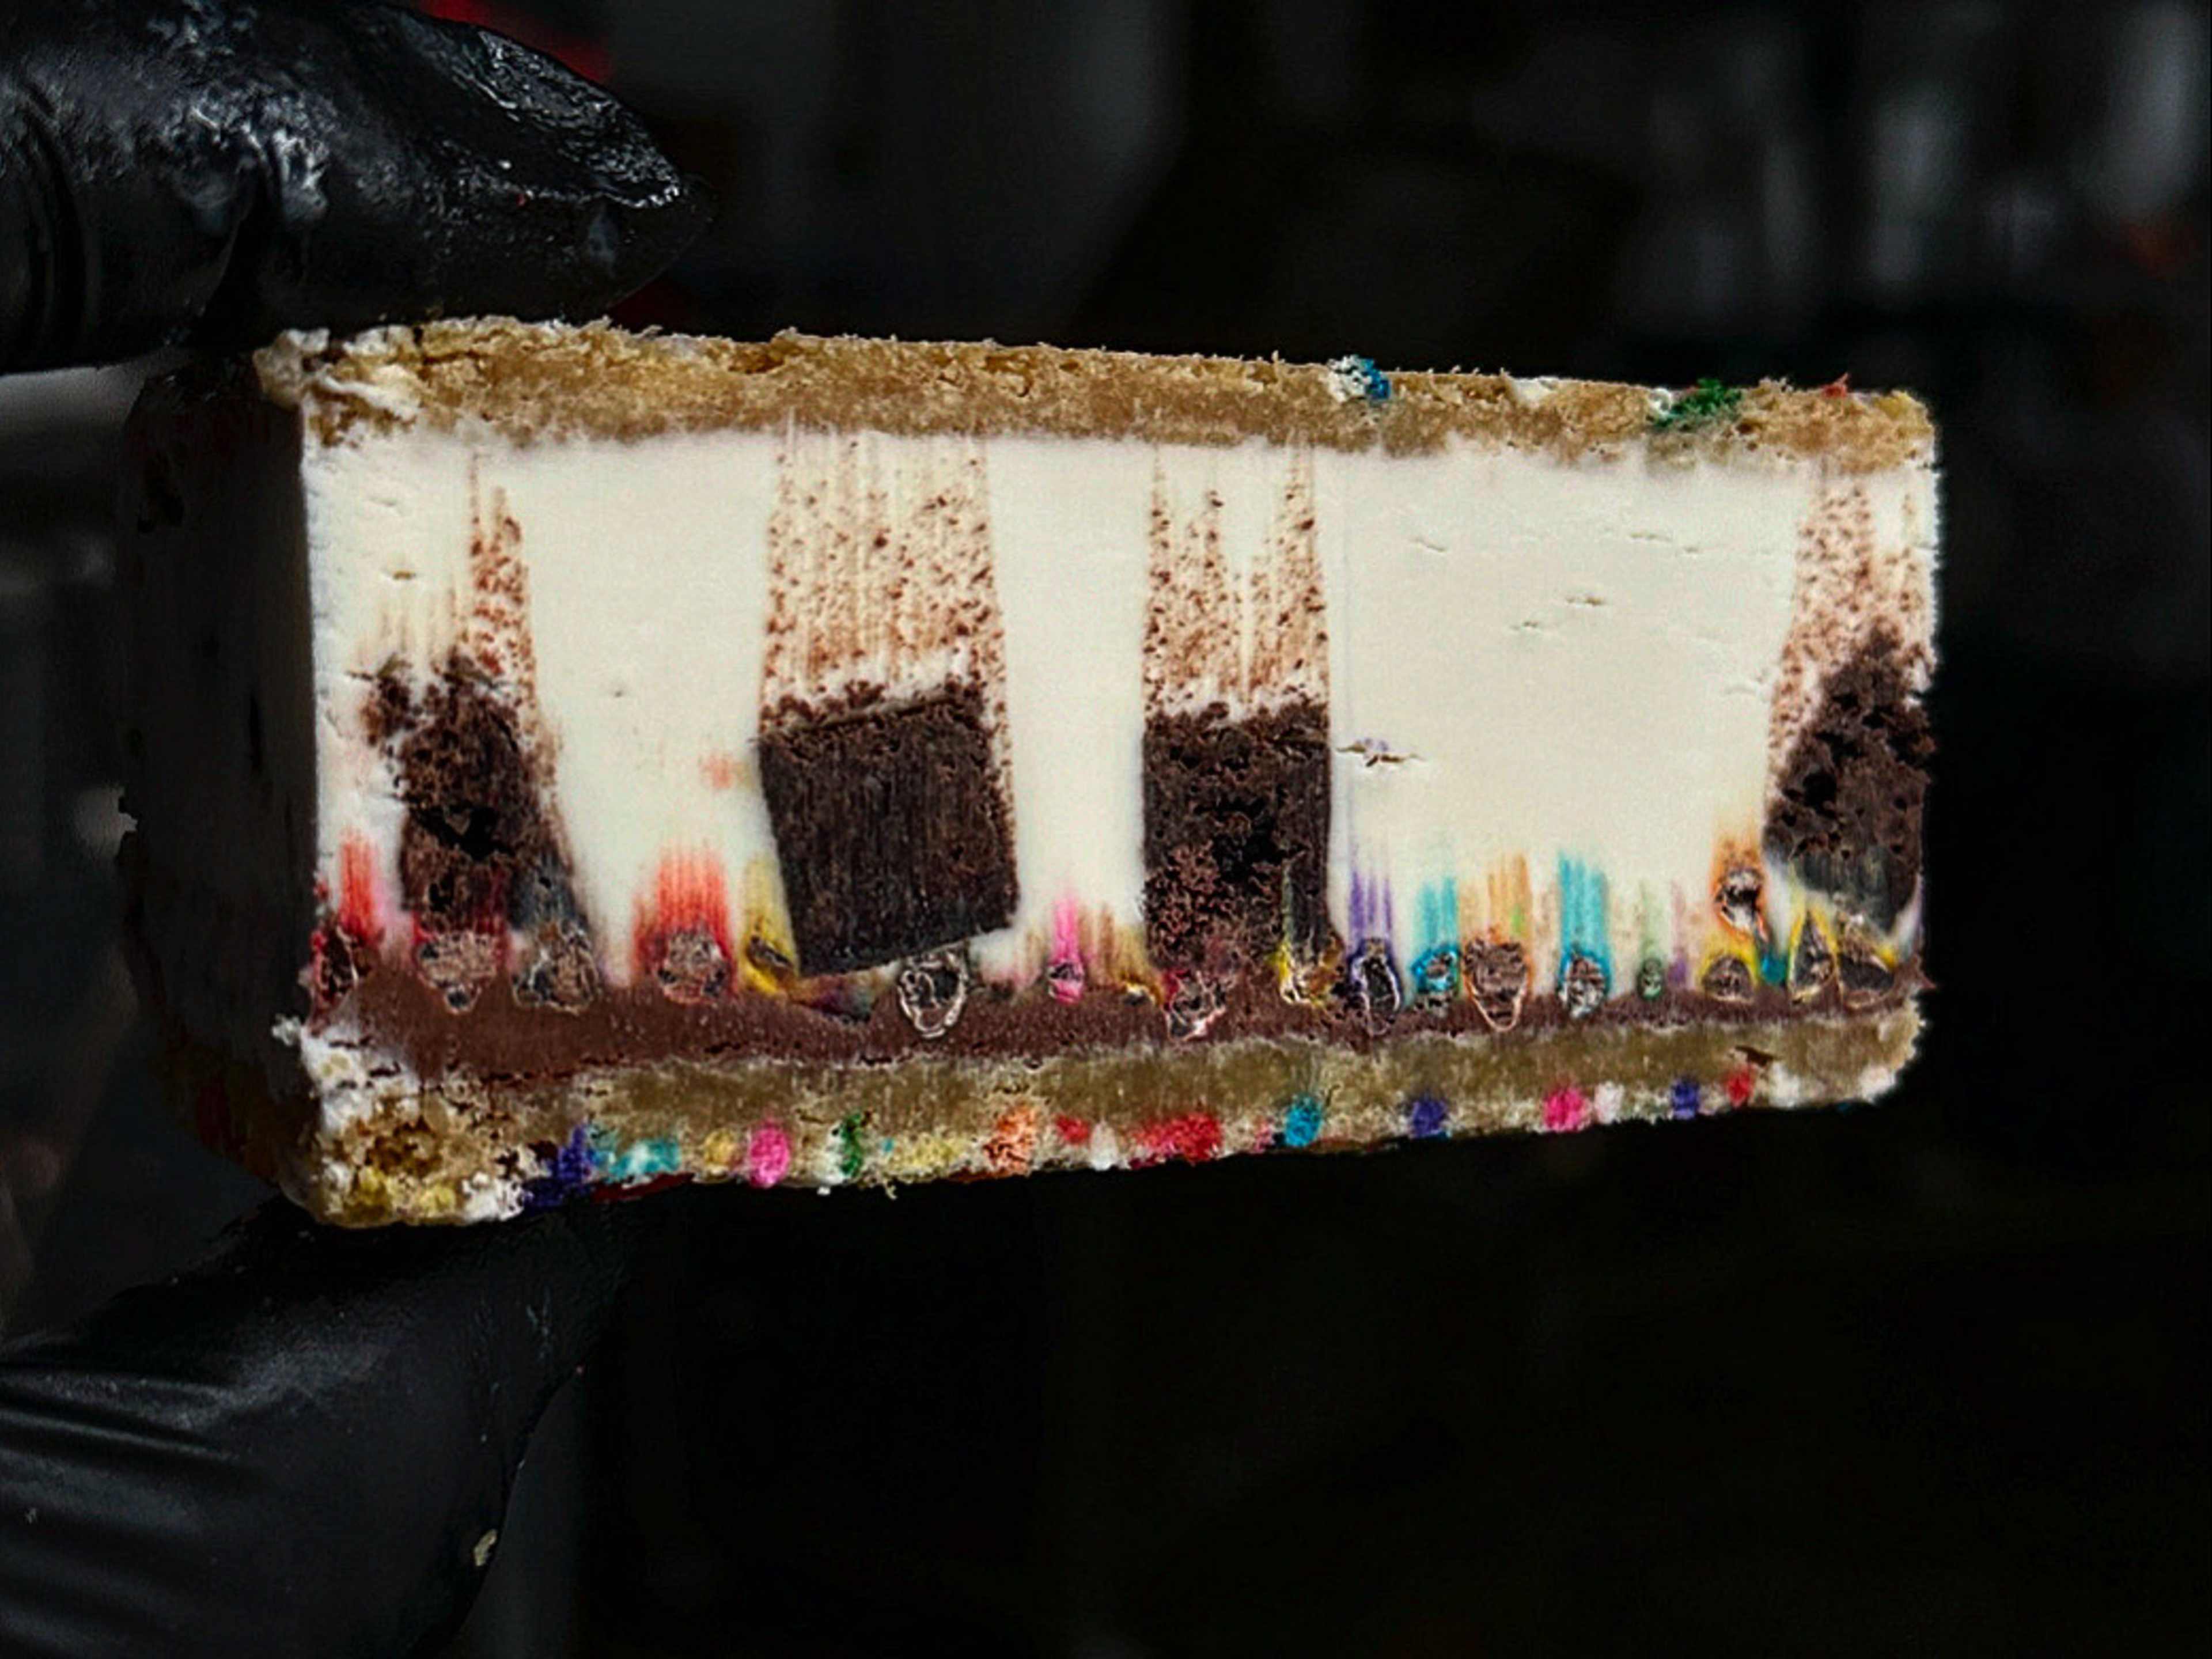 This is the ice cream brick at 1-900-ICE-CREAM.